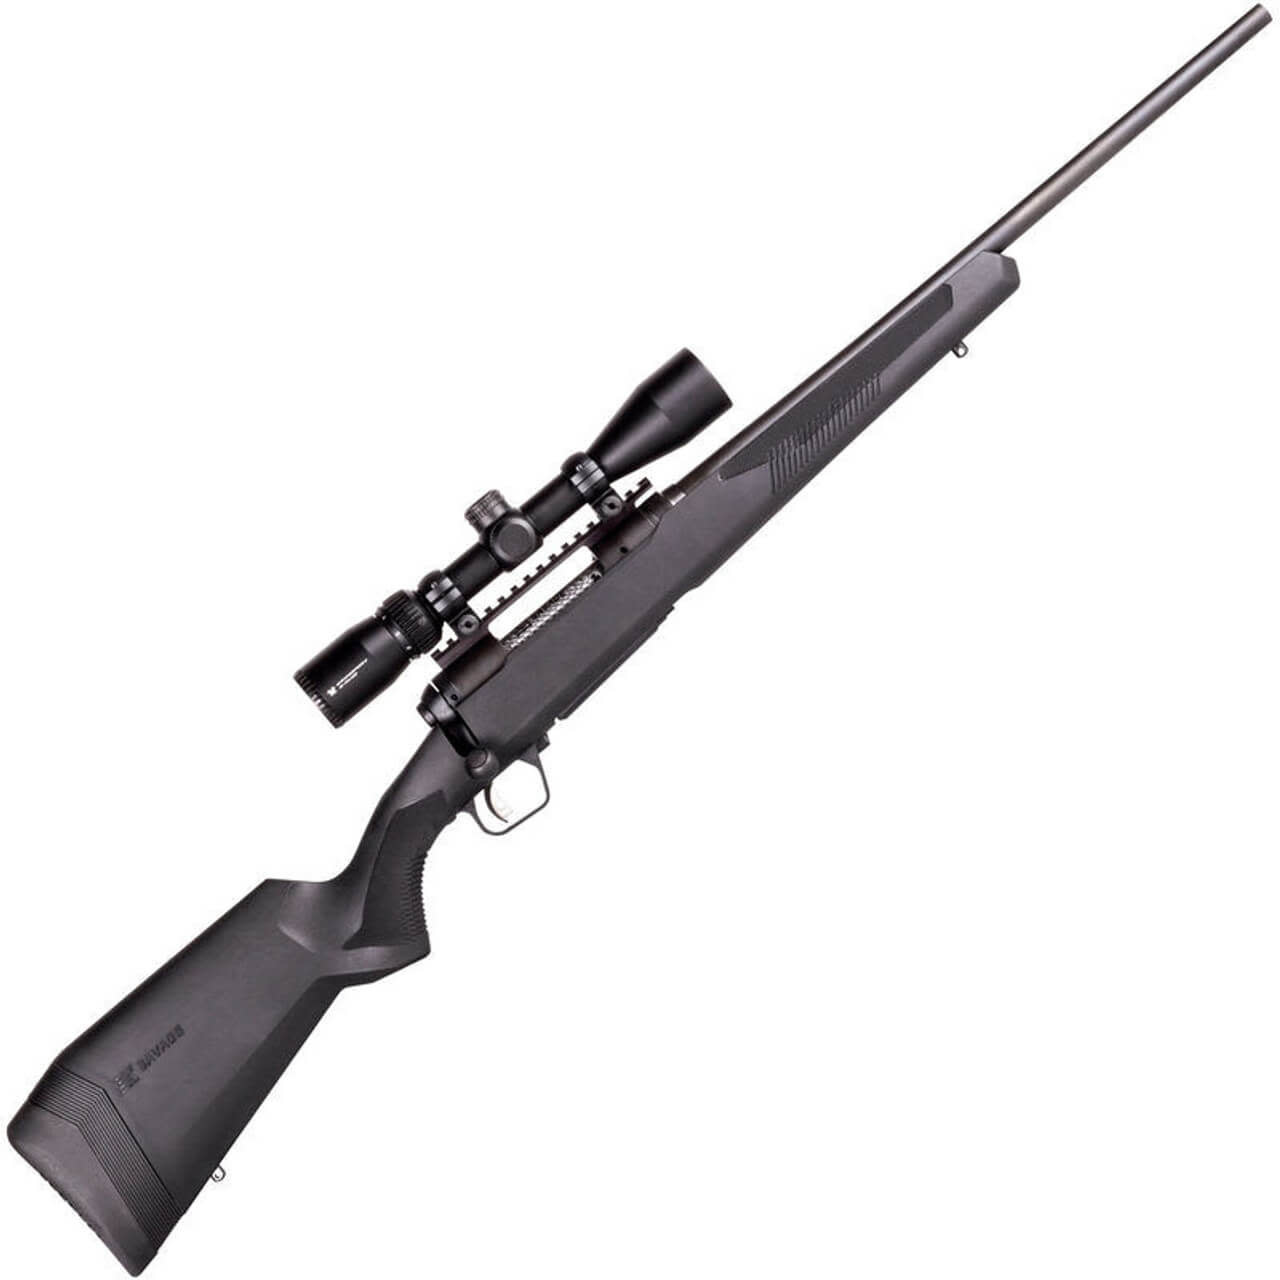 Savage 57308 110 Apex Hunter XP Bolt Action Rifle 270 Wsm, 24" Bbl Blk, Blk Syn Lop Stock, 2 Rnd Dm, Vortex Crossfire II 3-9X40, Acc, 0685-2111